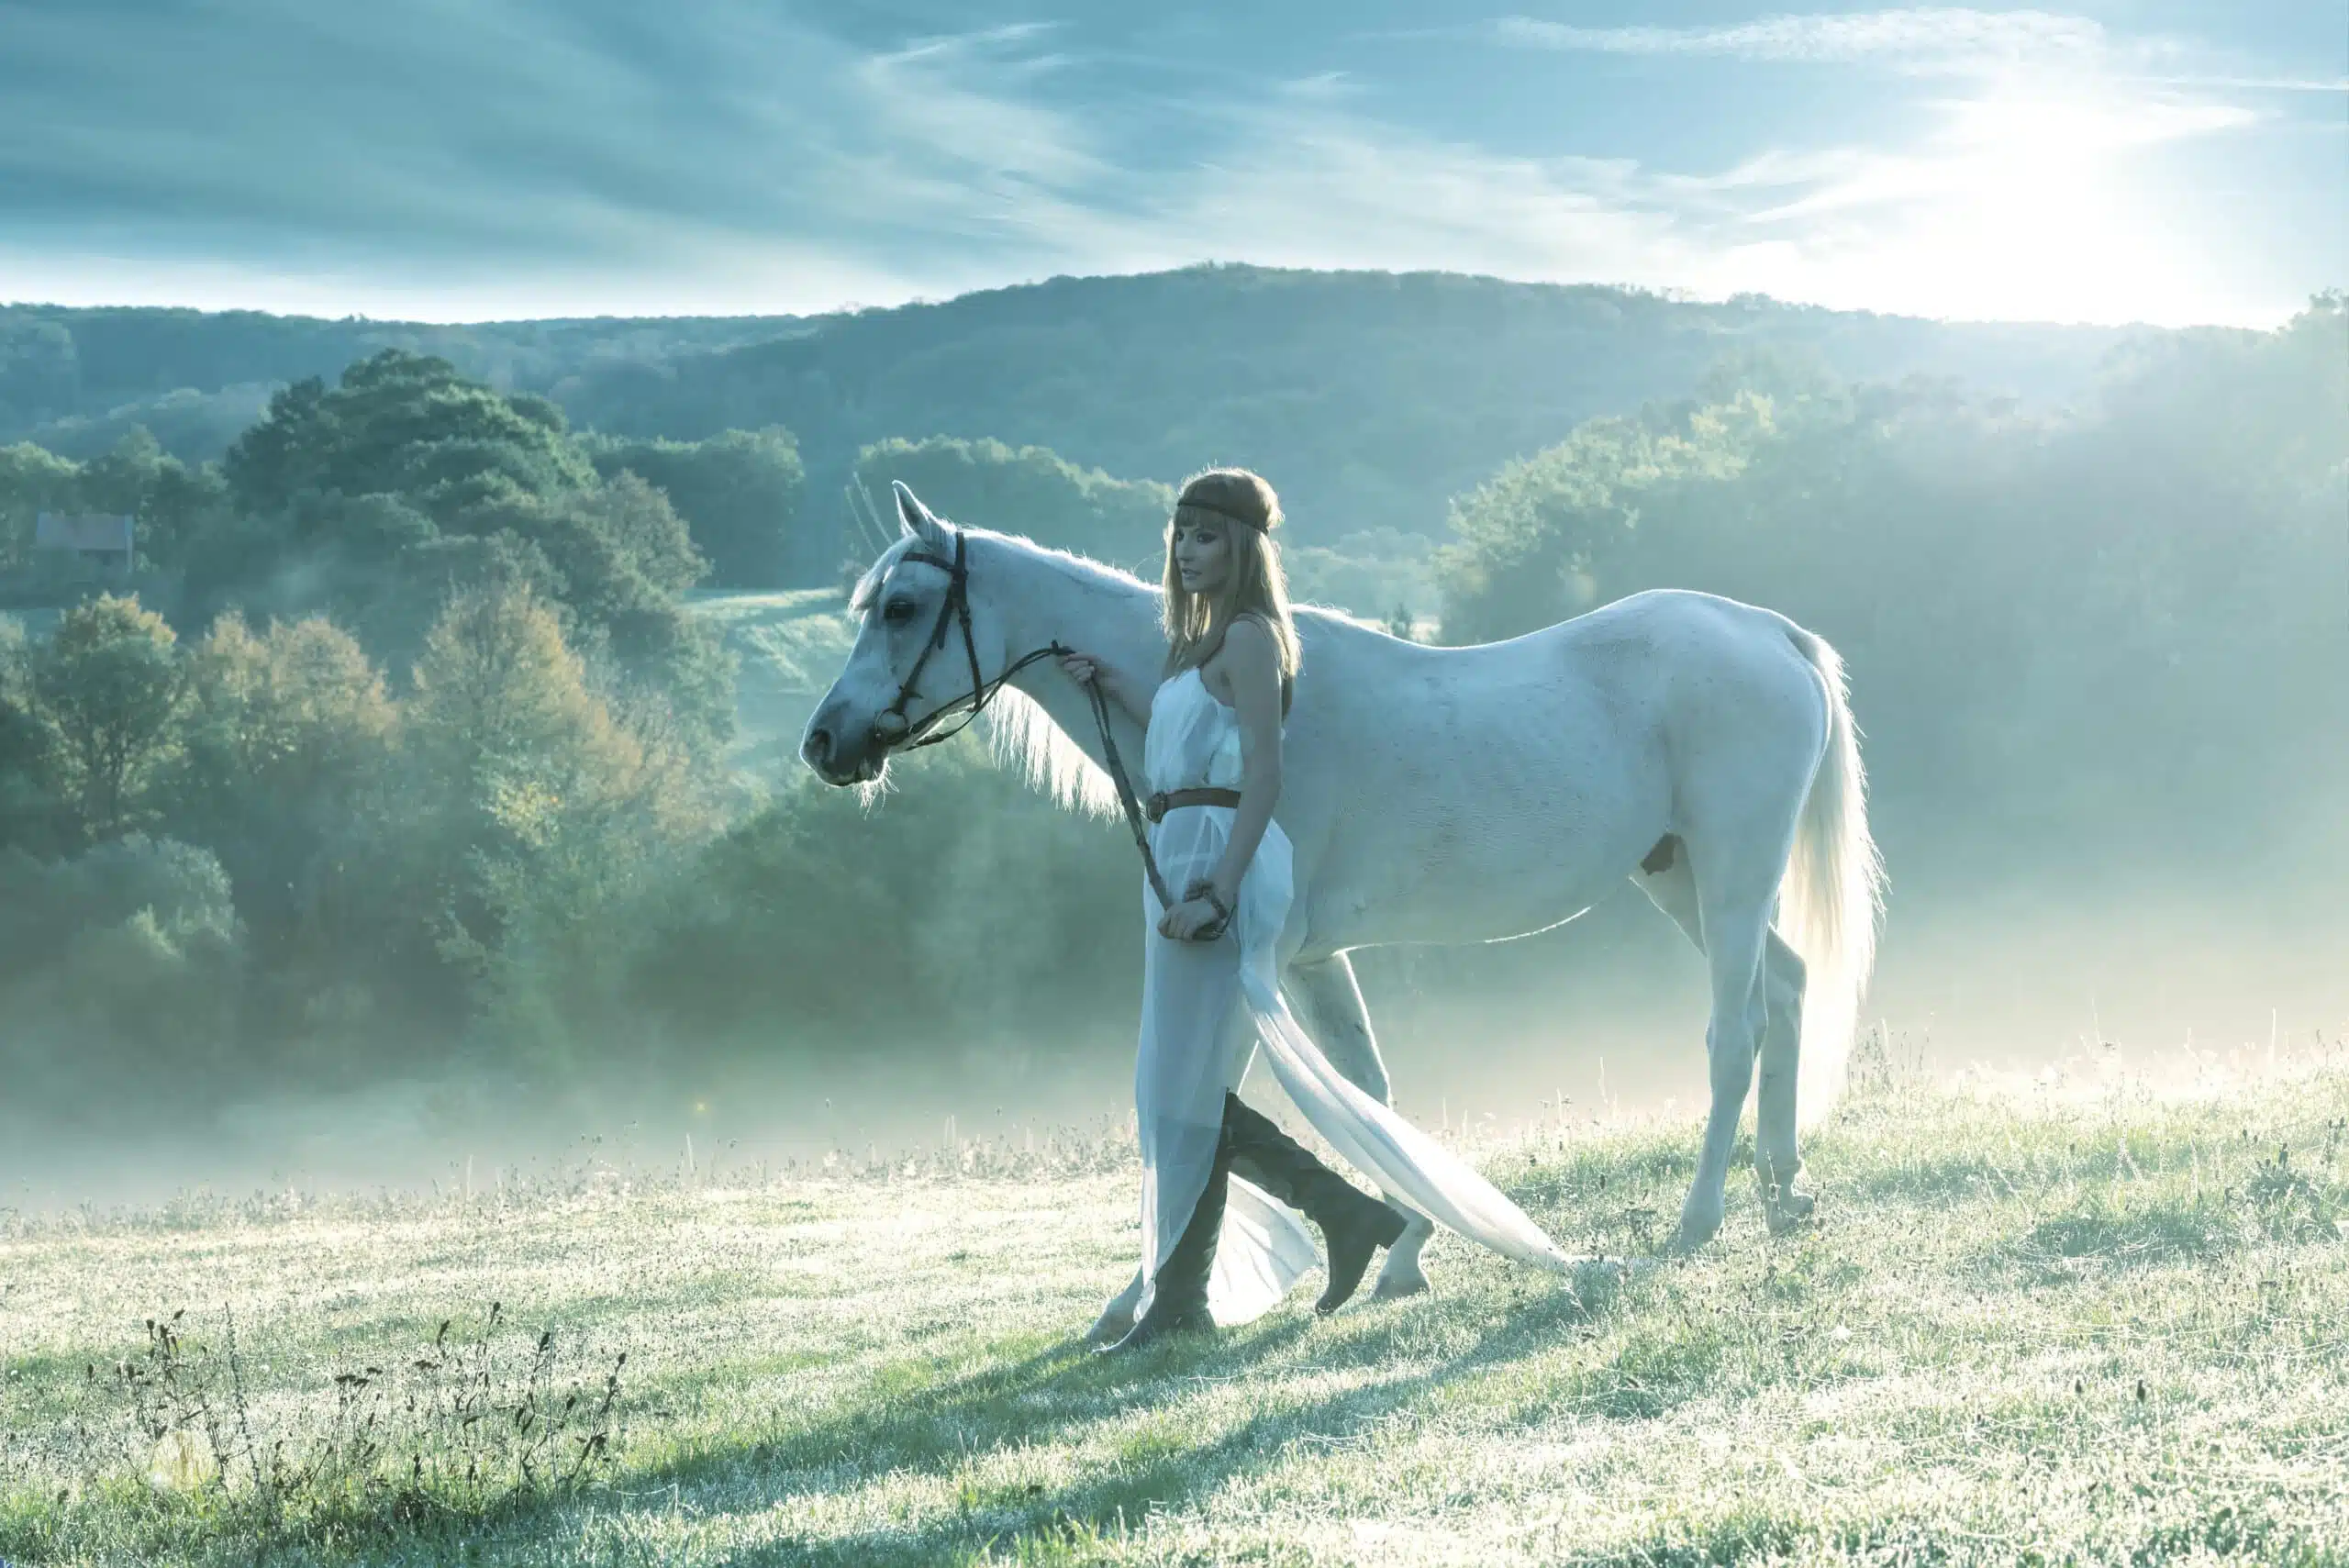 Beautiful sensual women with white horse